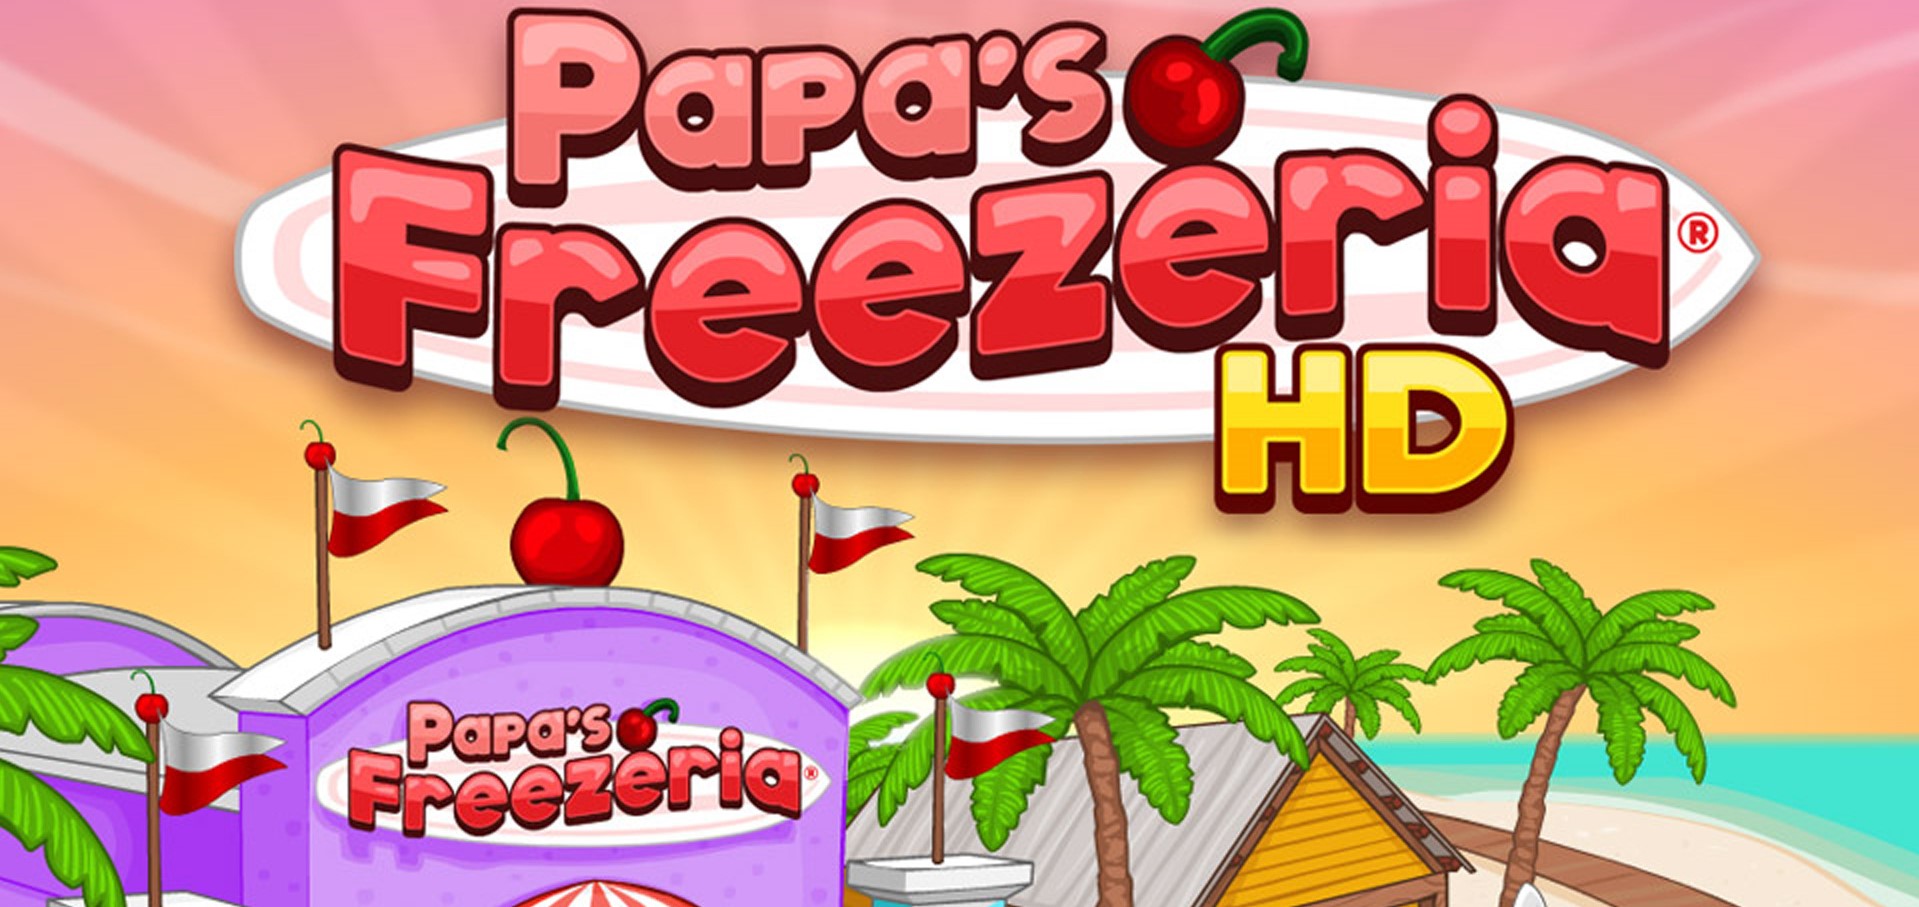 Papa's Burgeria/ Freezeria - Gamer Hub Plus